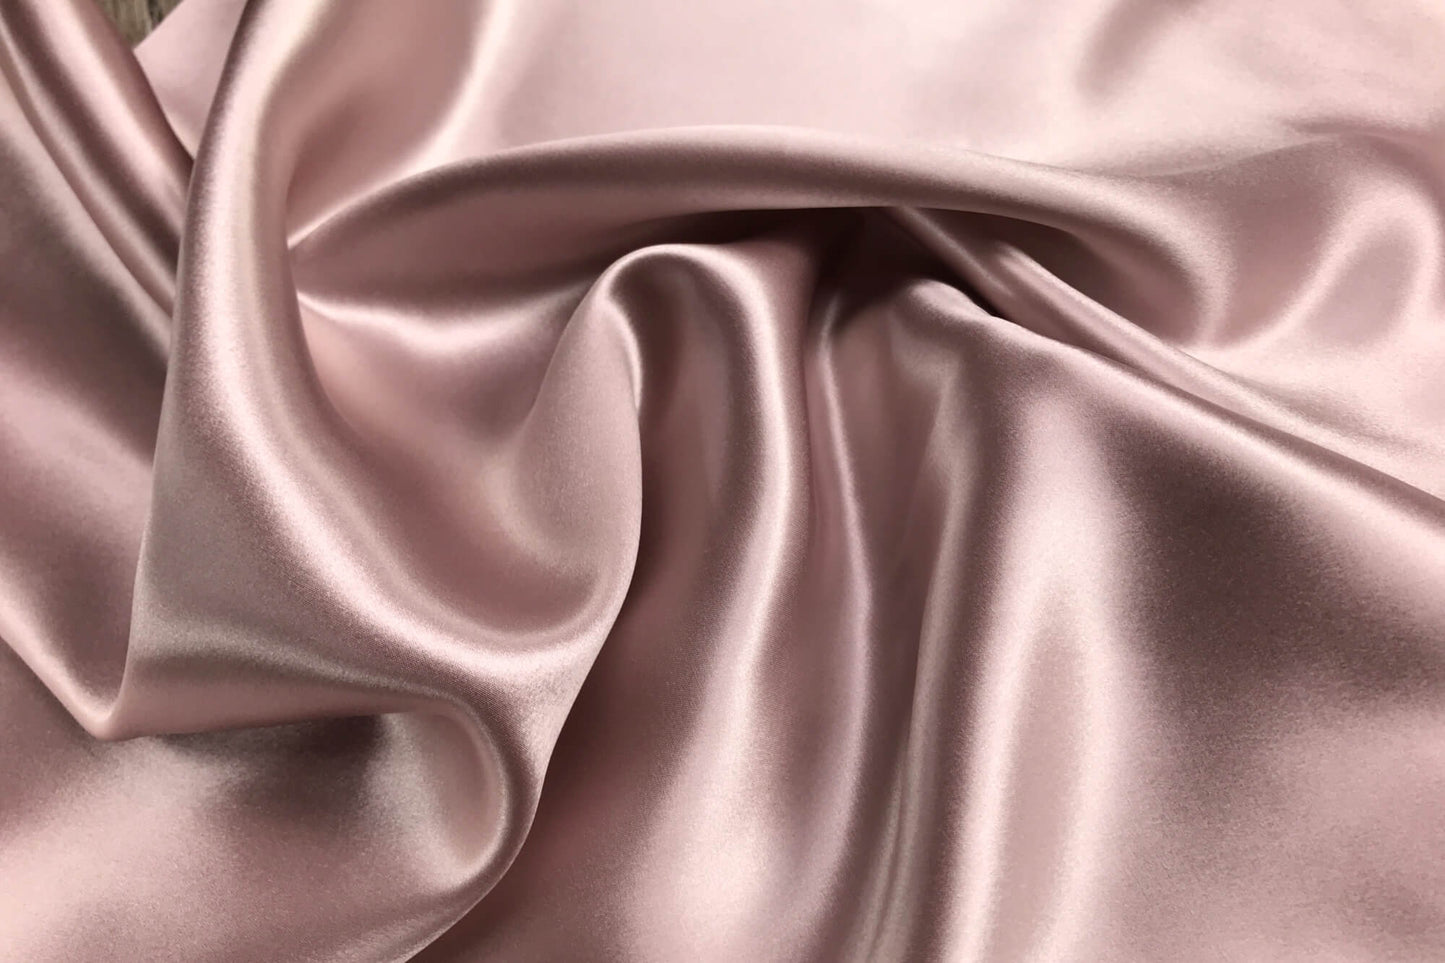 25 Momme Silk Pillowcase - King Vintage Pink Envelope Closure - Outlet